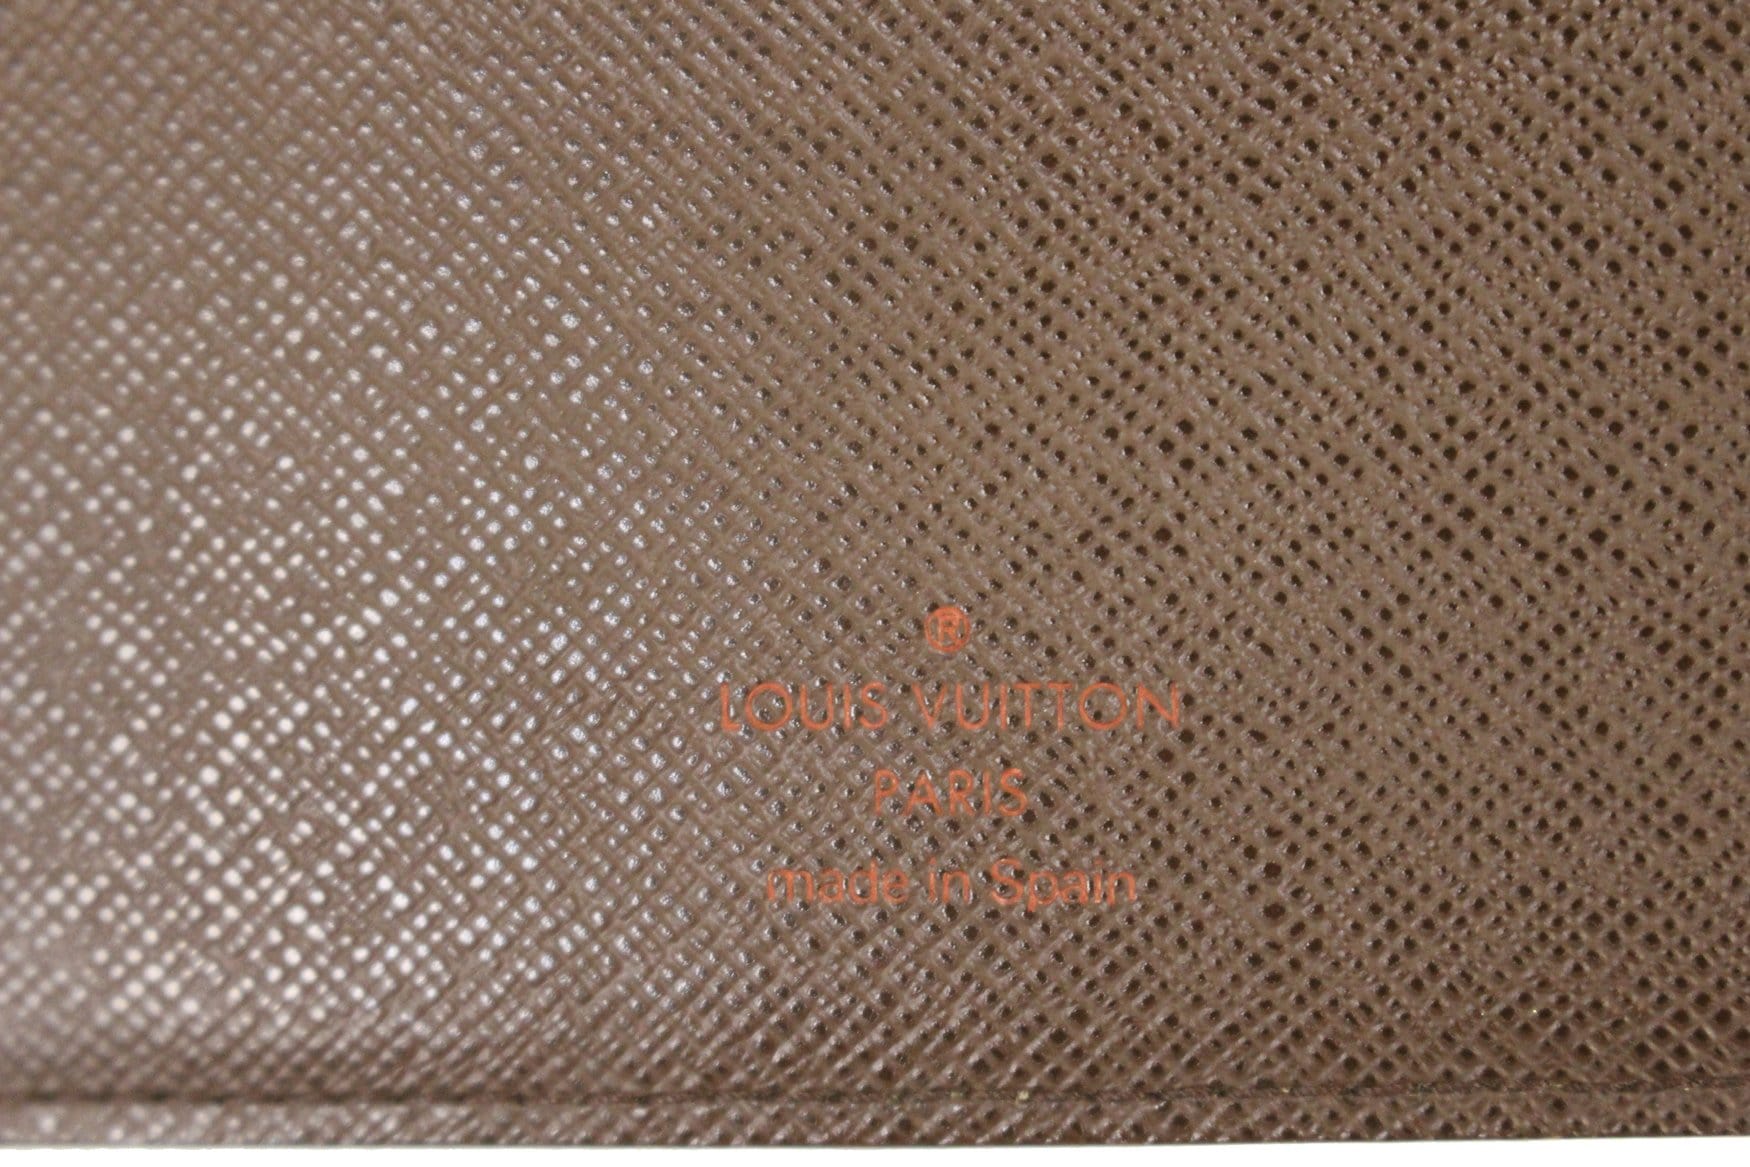 LOUIS VUITTON Louis Vuitton Monogram Agenda Bureau Notebook Cover